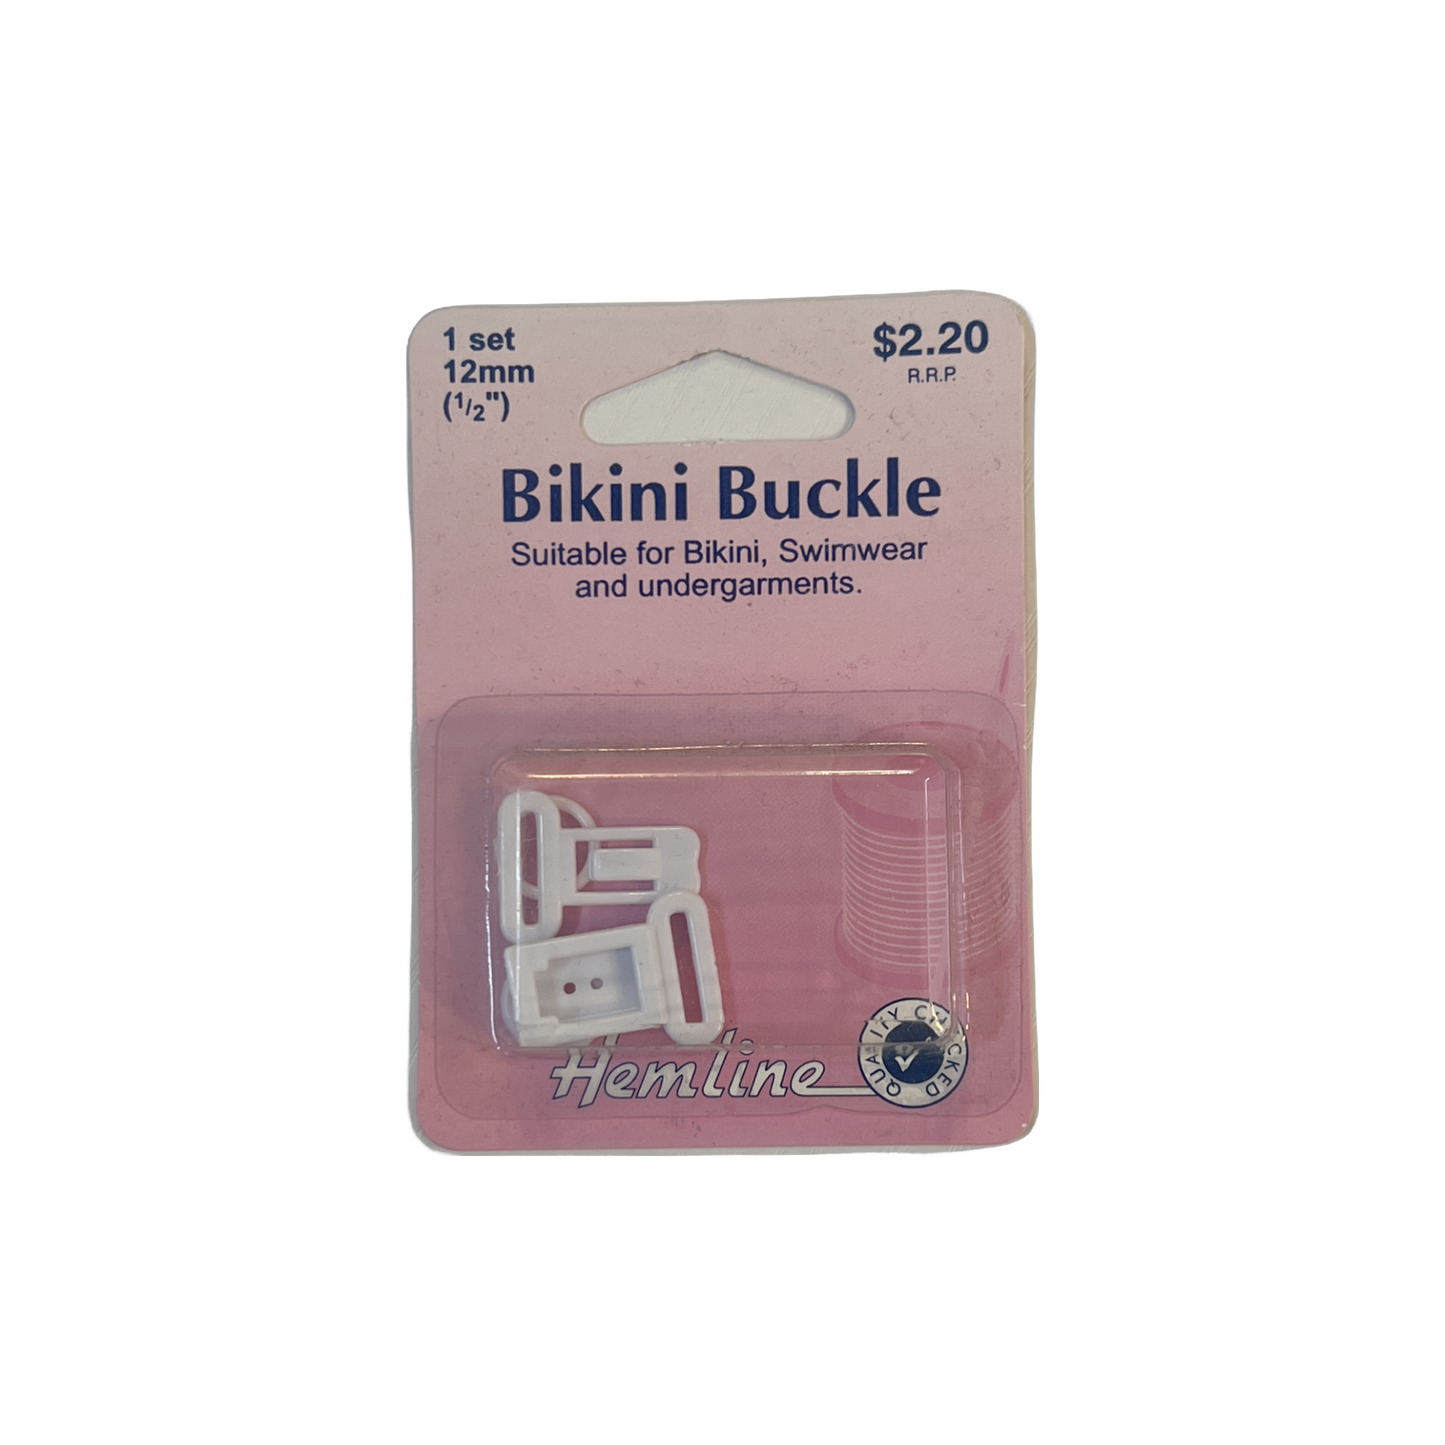 Hemline - Bikini Buckle Set: White - 12mm